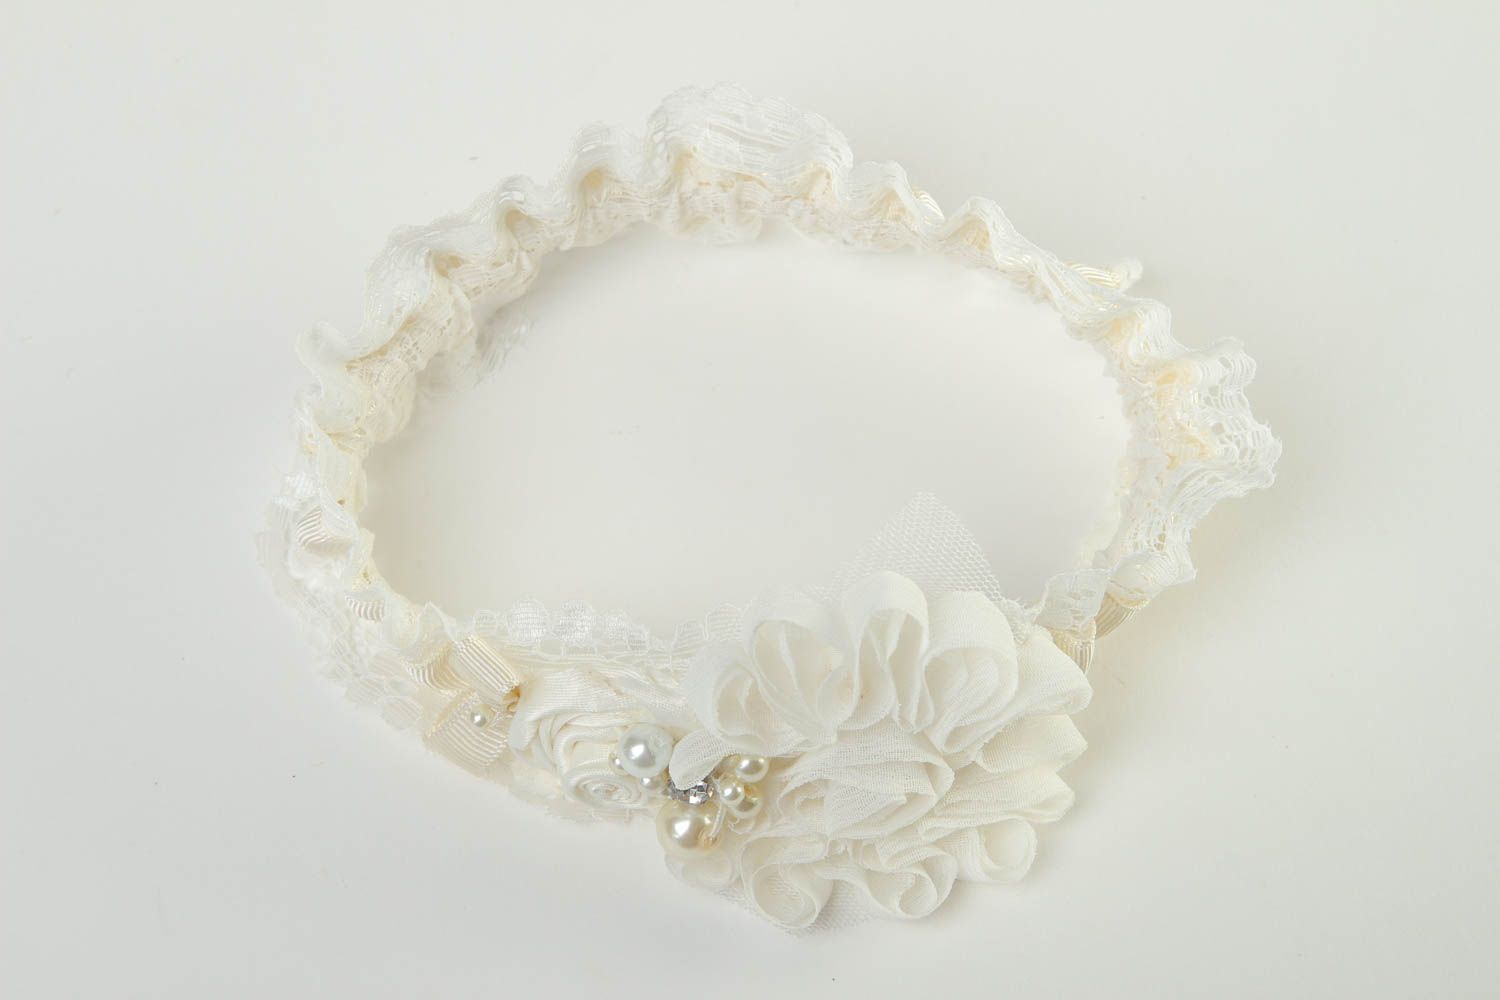 Unusual handmade bridal garter wedding garters handmade accessories for girls photo 2